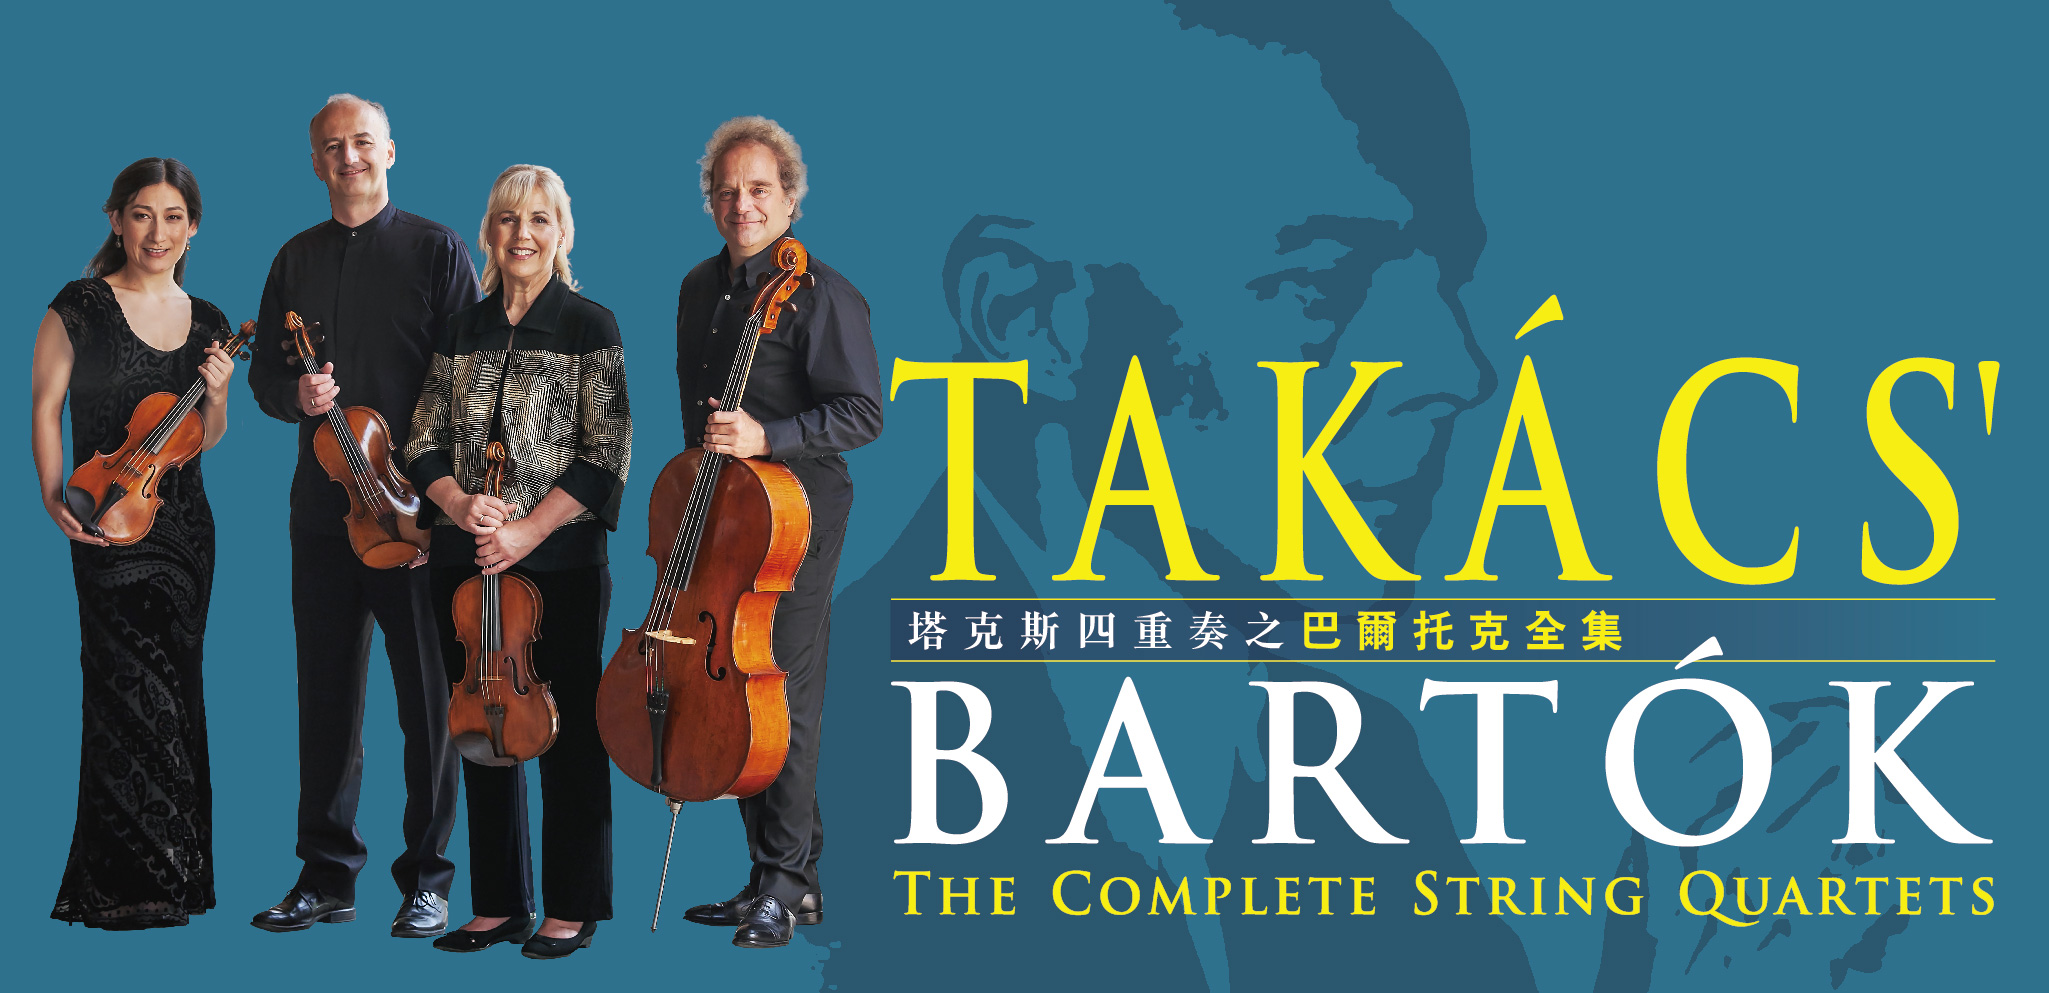 Takács’ Bartók: The Complete String Quartets